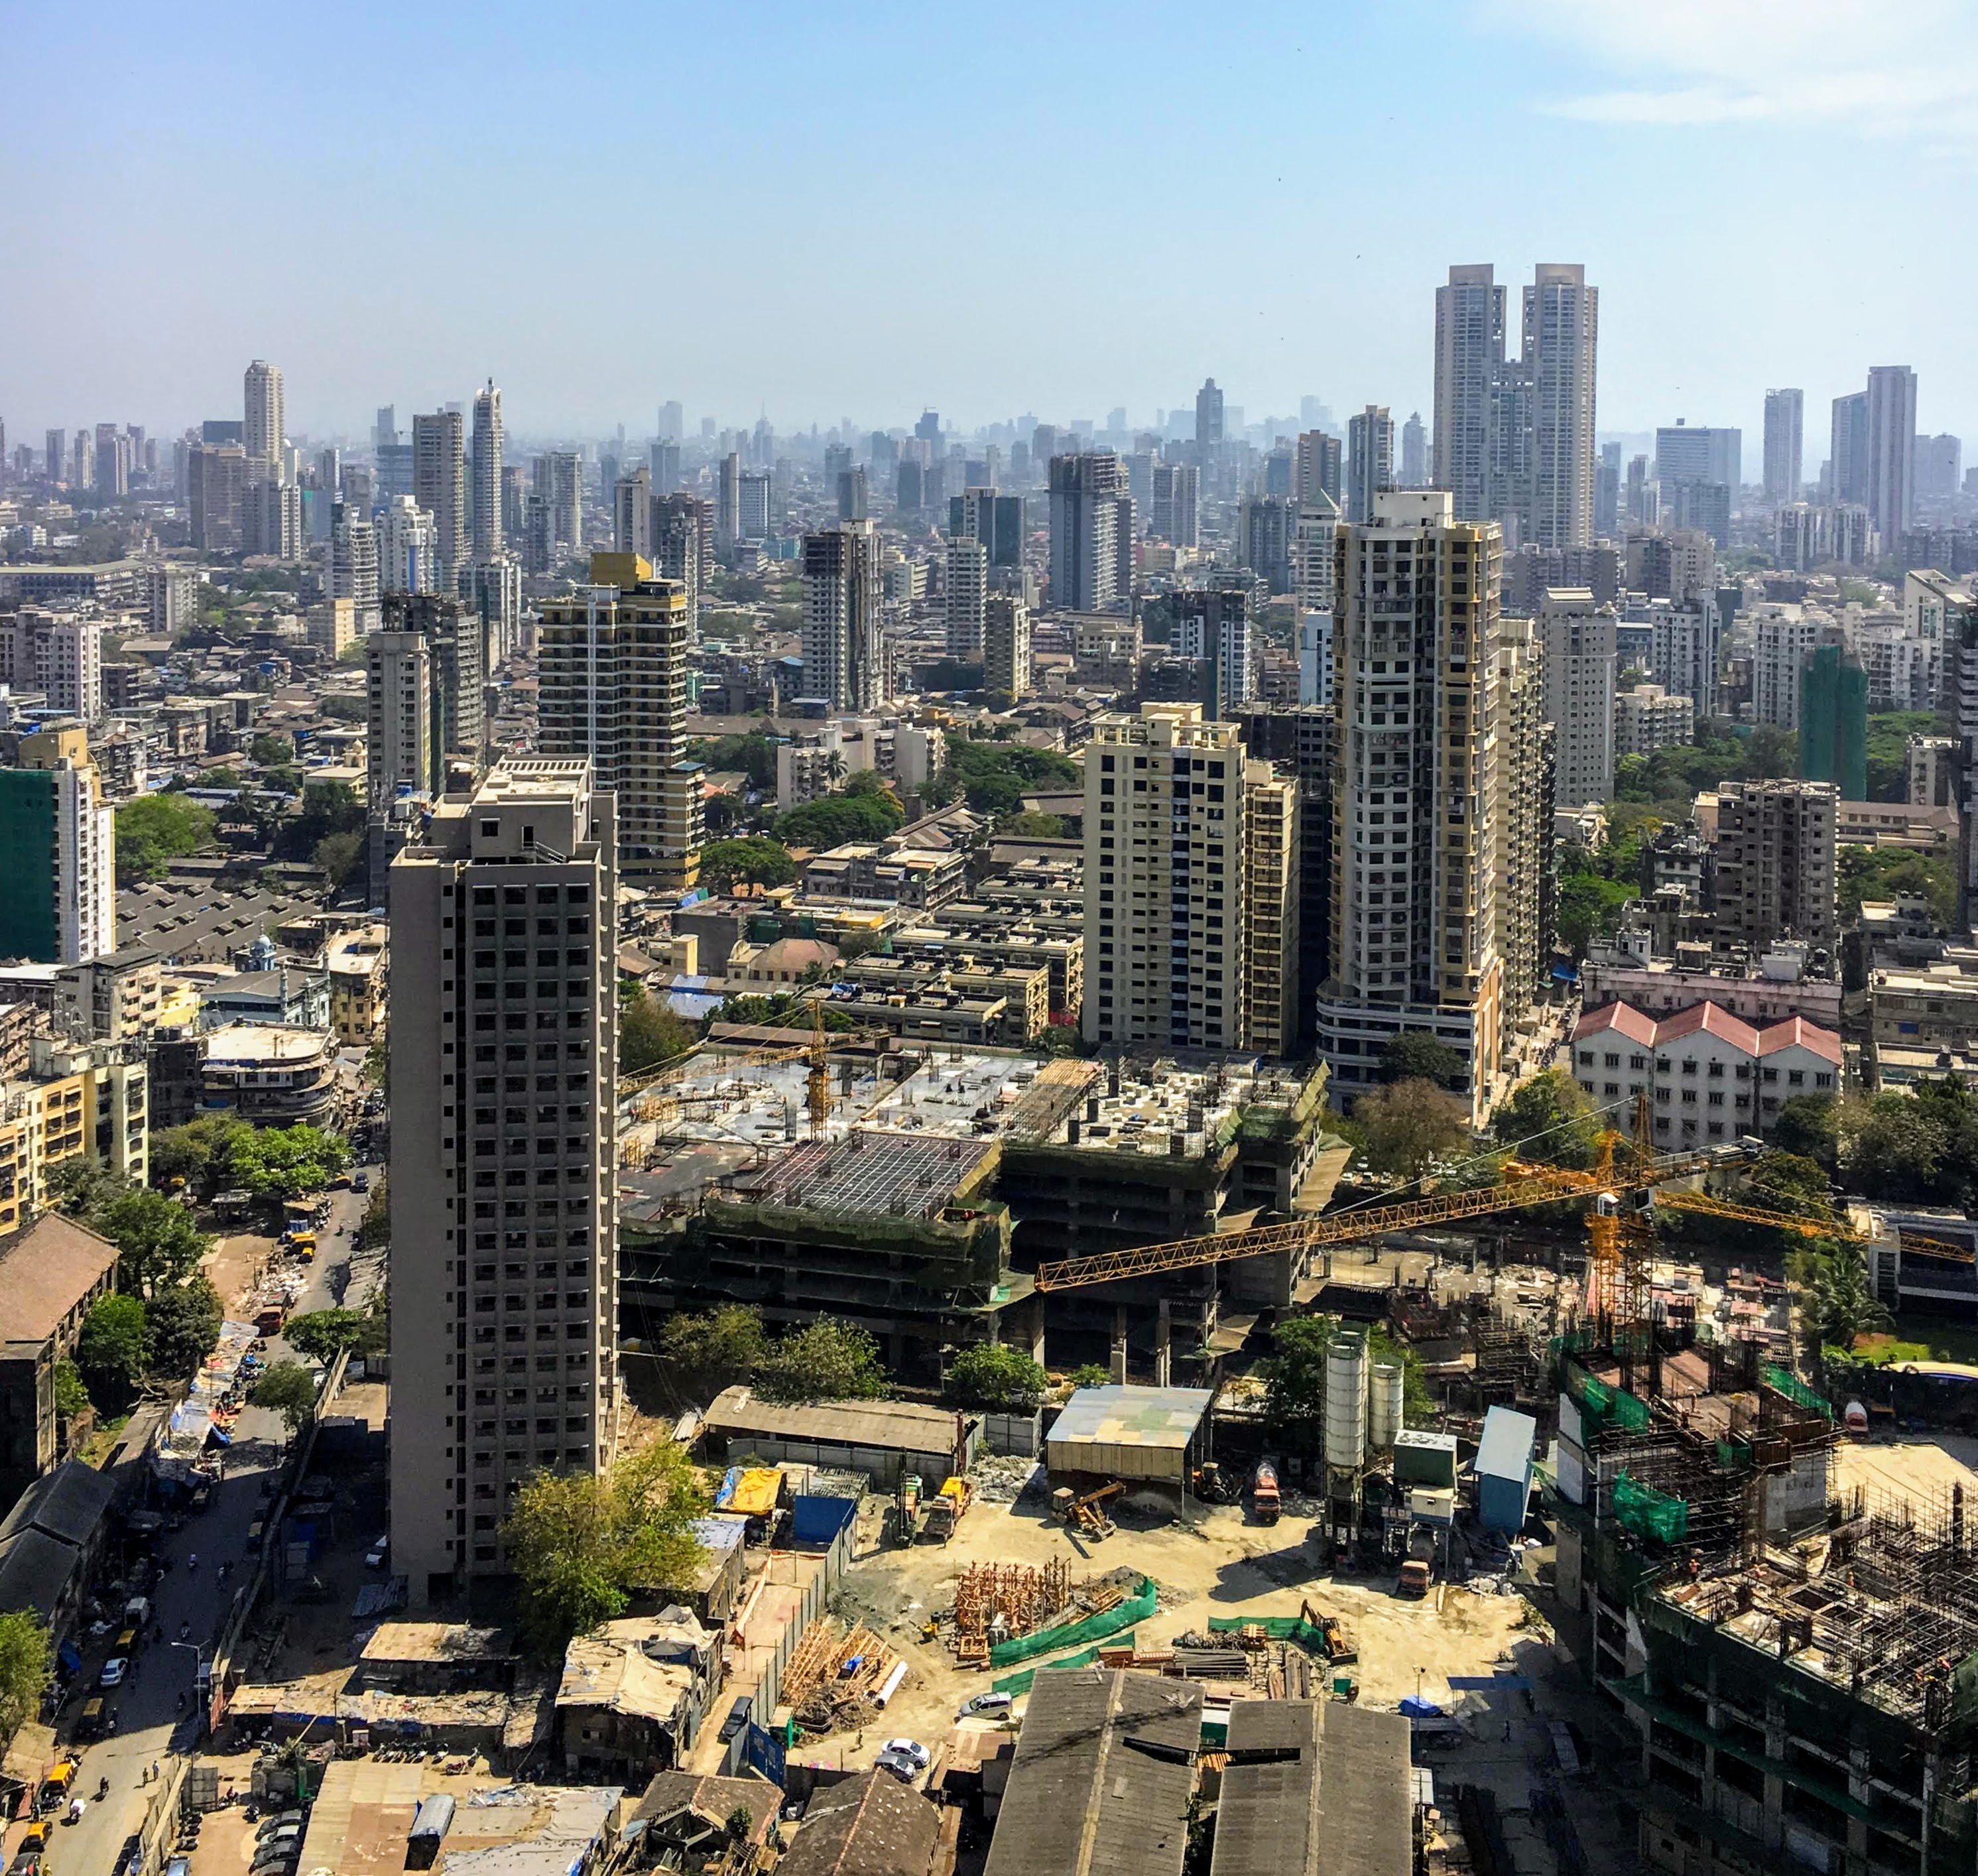 View of Mumbai, India skyscrapers